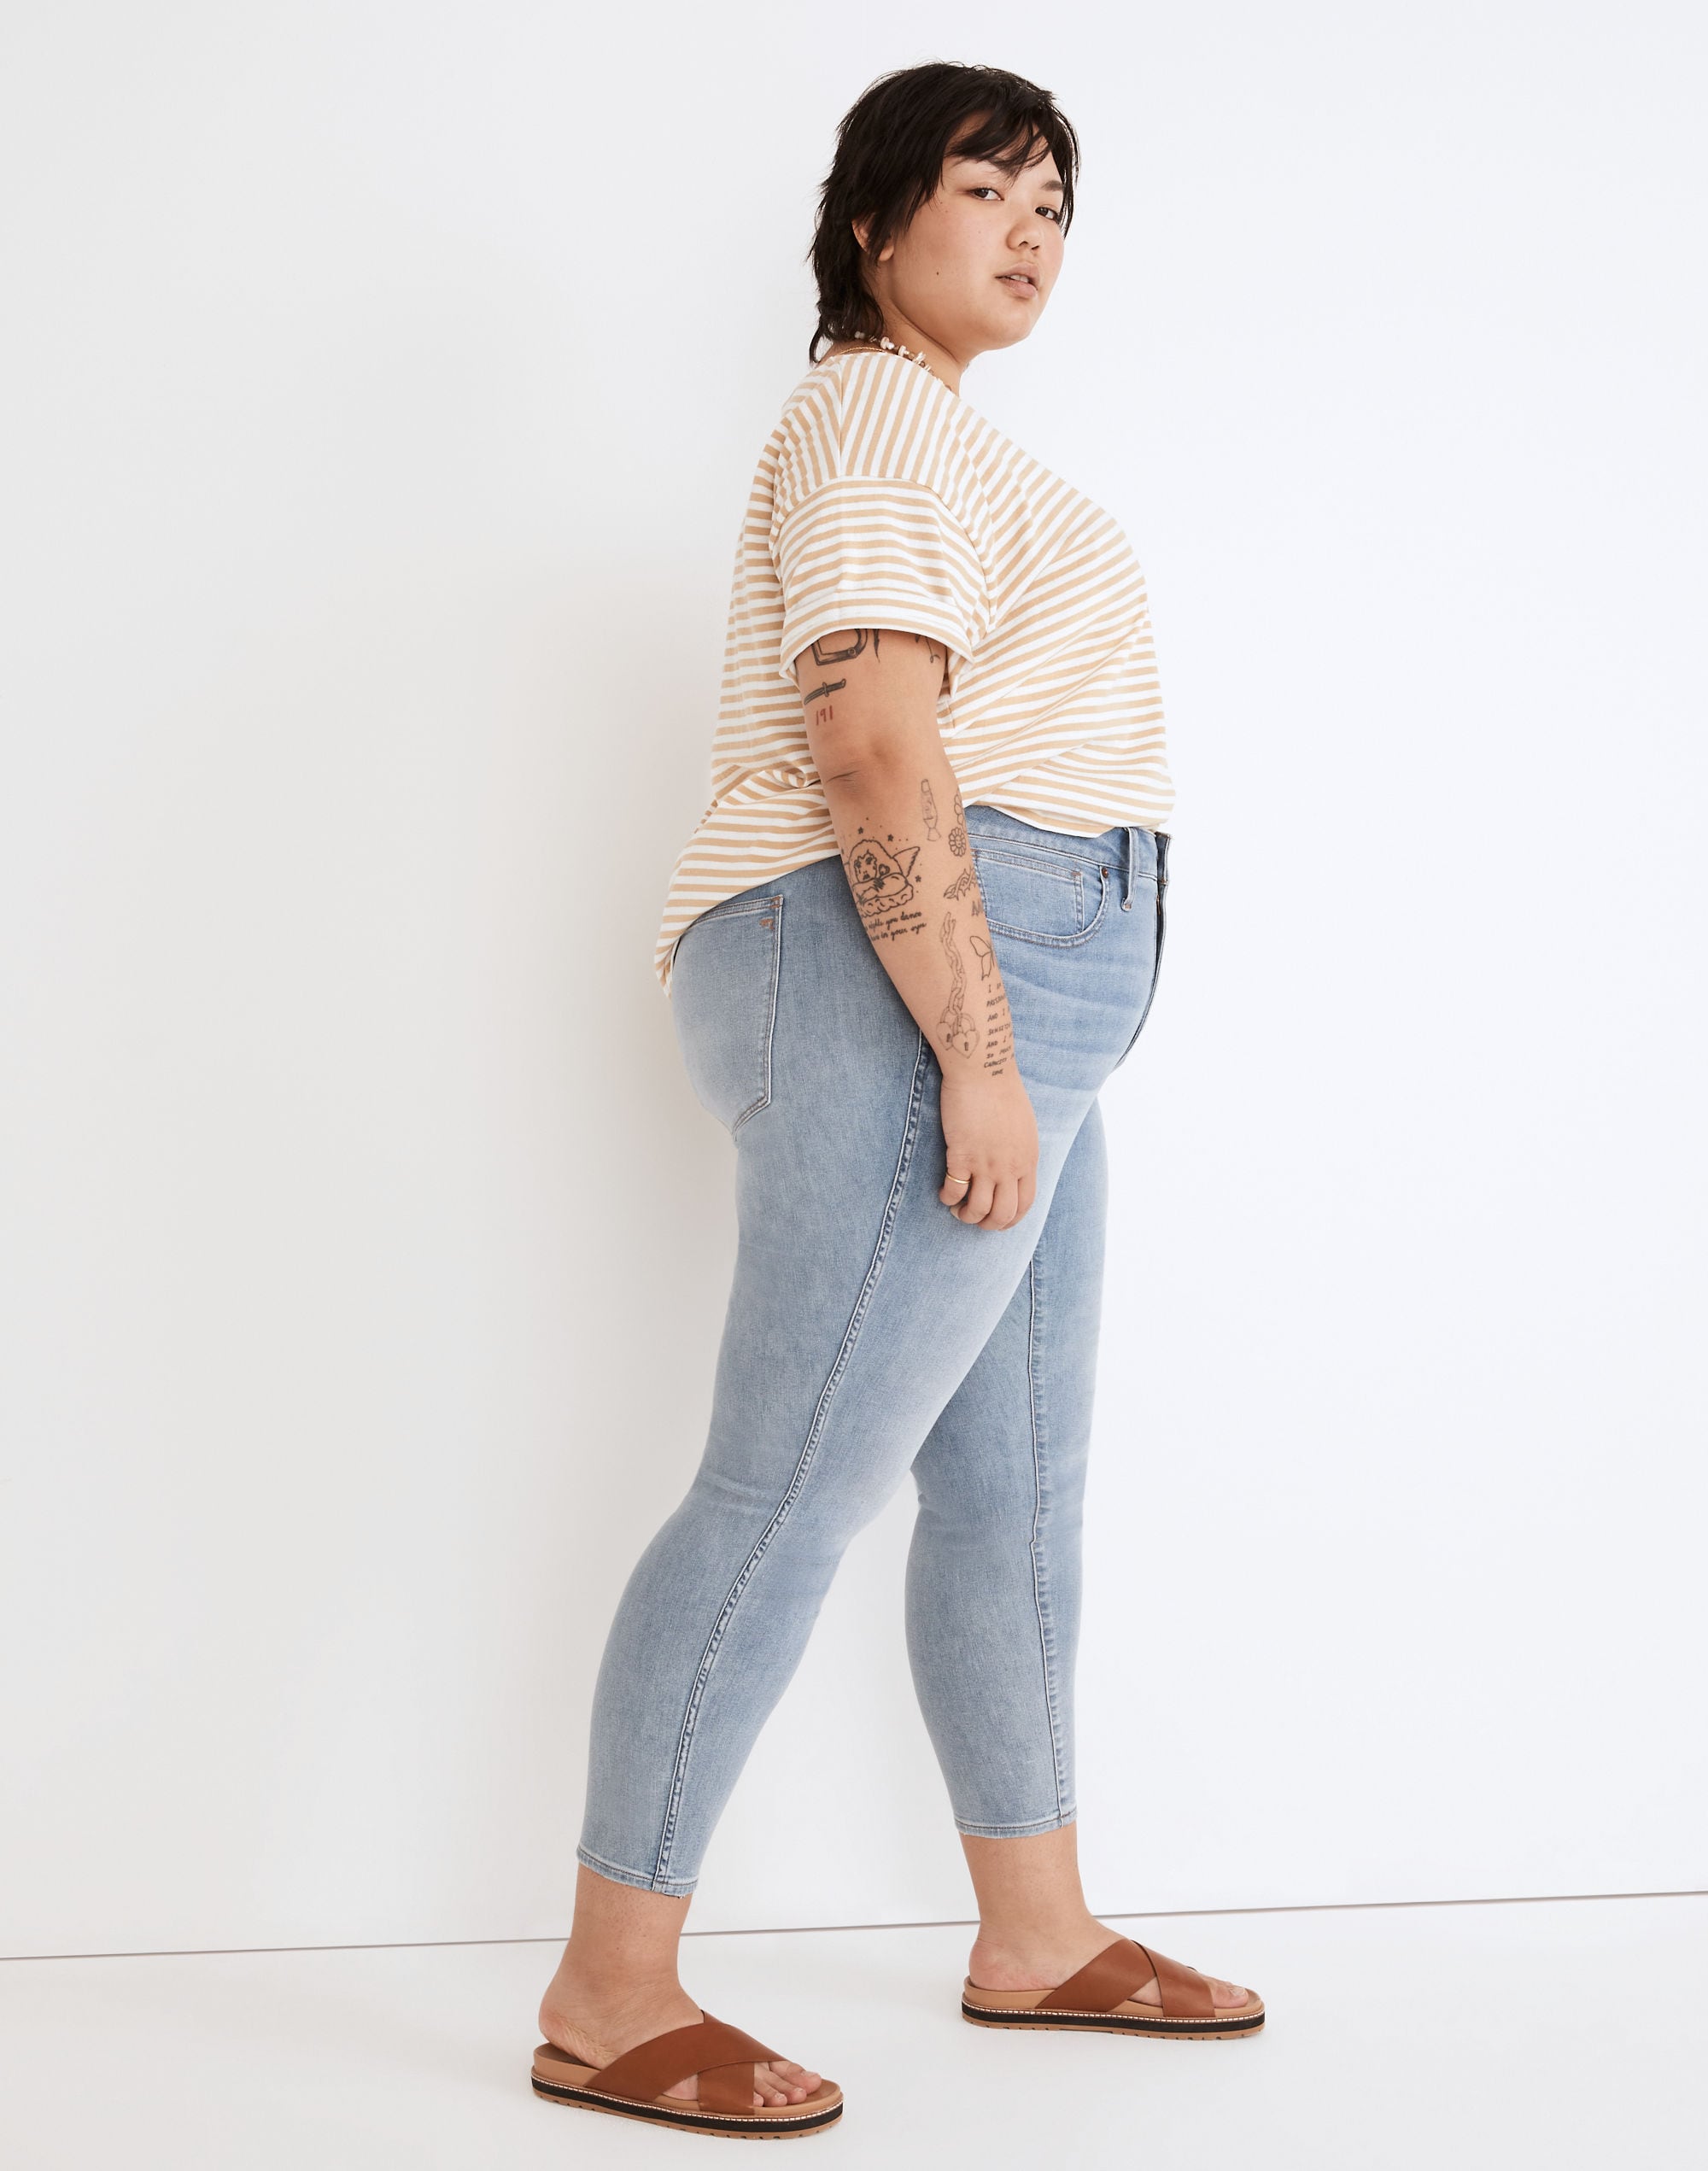 Plus High-Rise Skinny Crop Jeans in Carlton Wash